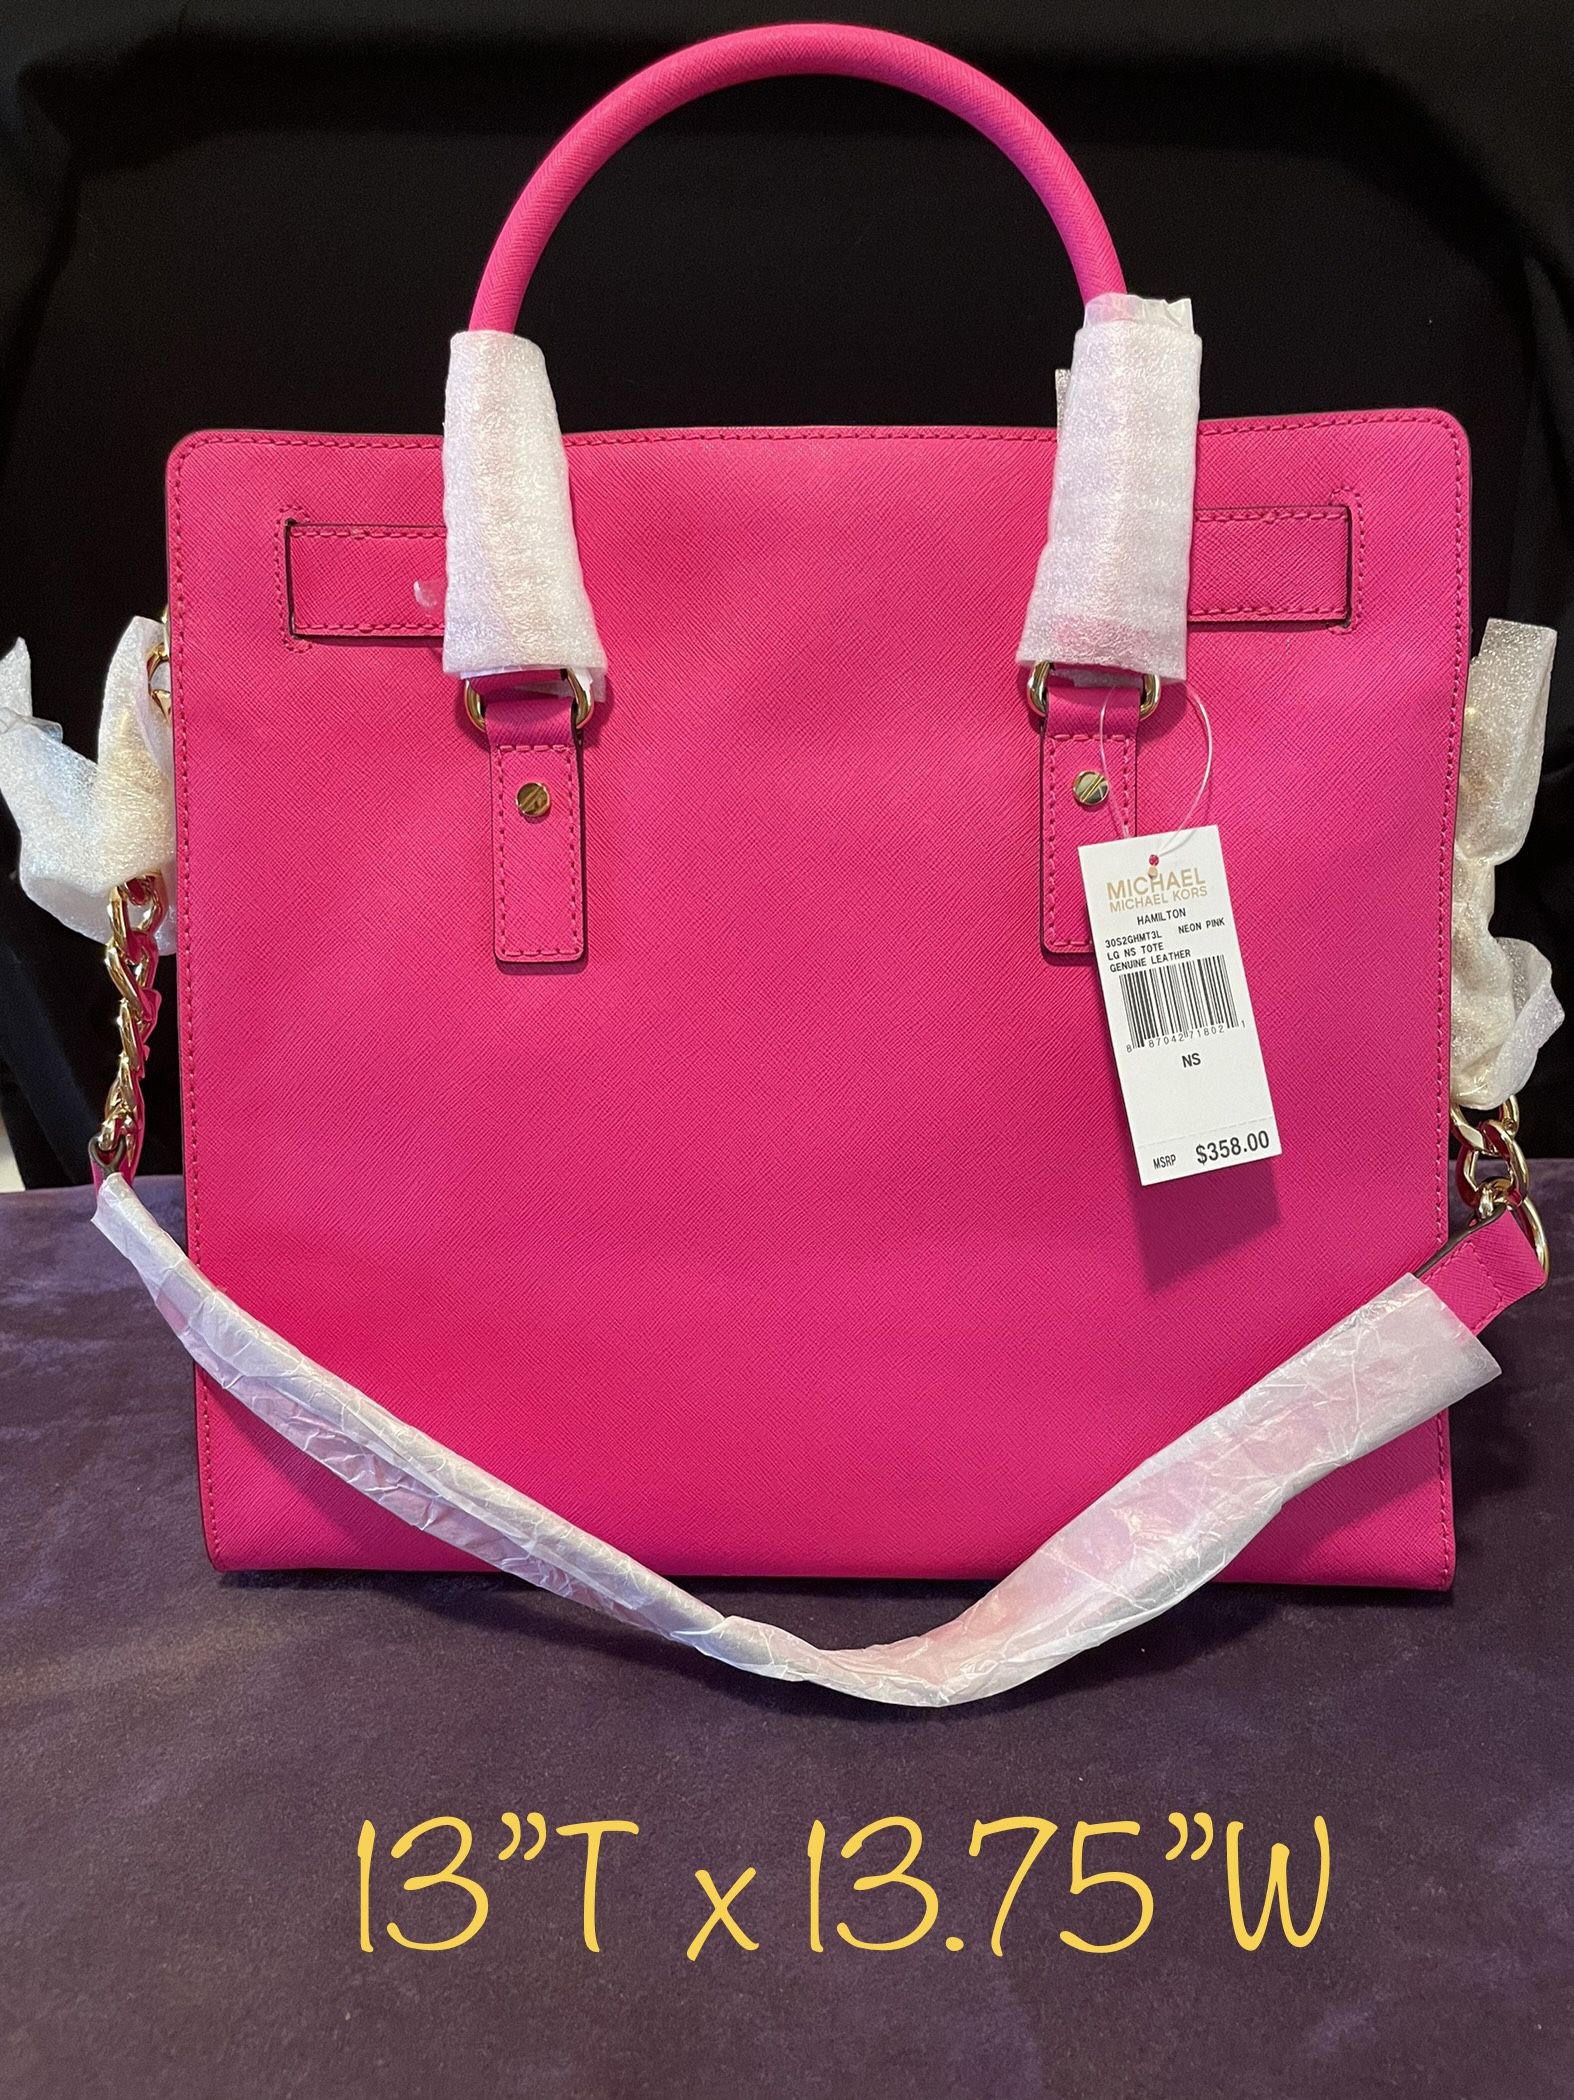 Michael Kors Hamilton Collection Neon Pink Bag for Sale in Santa